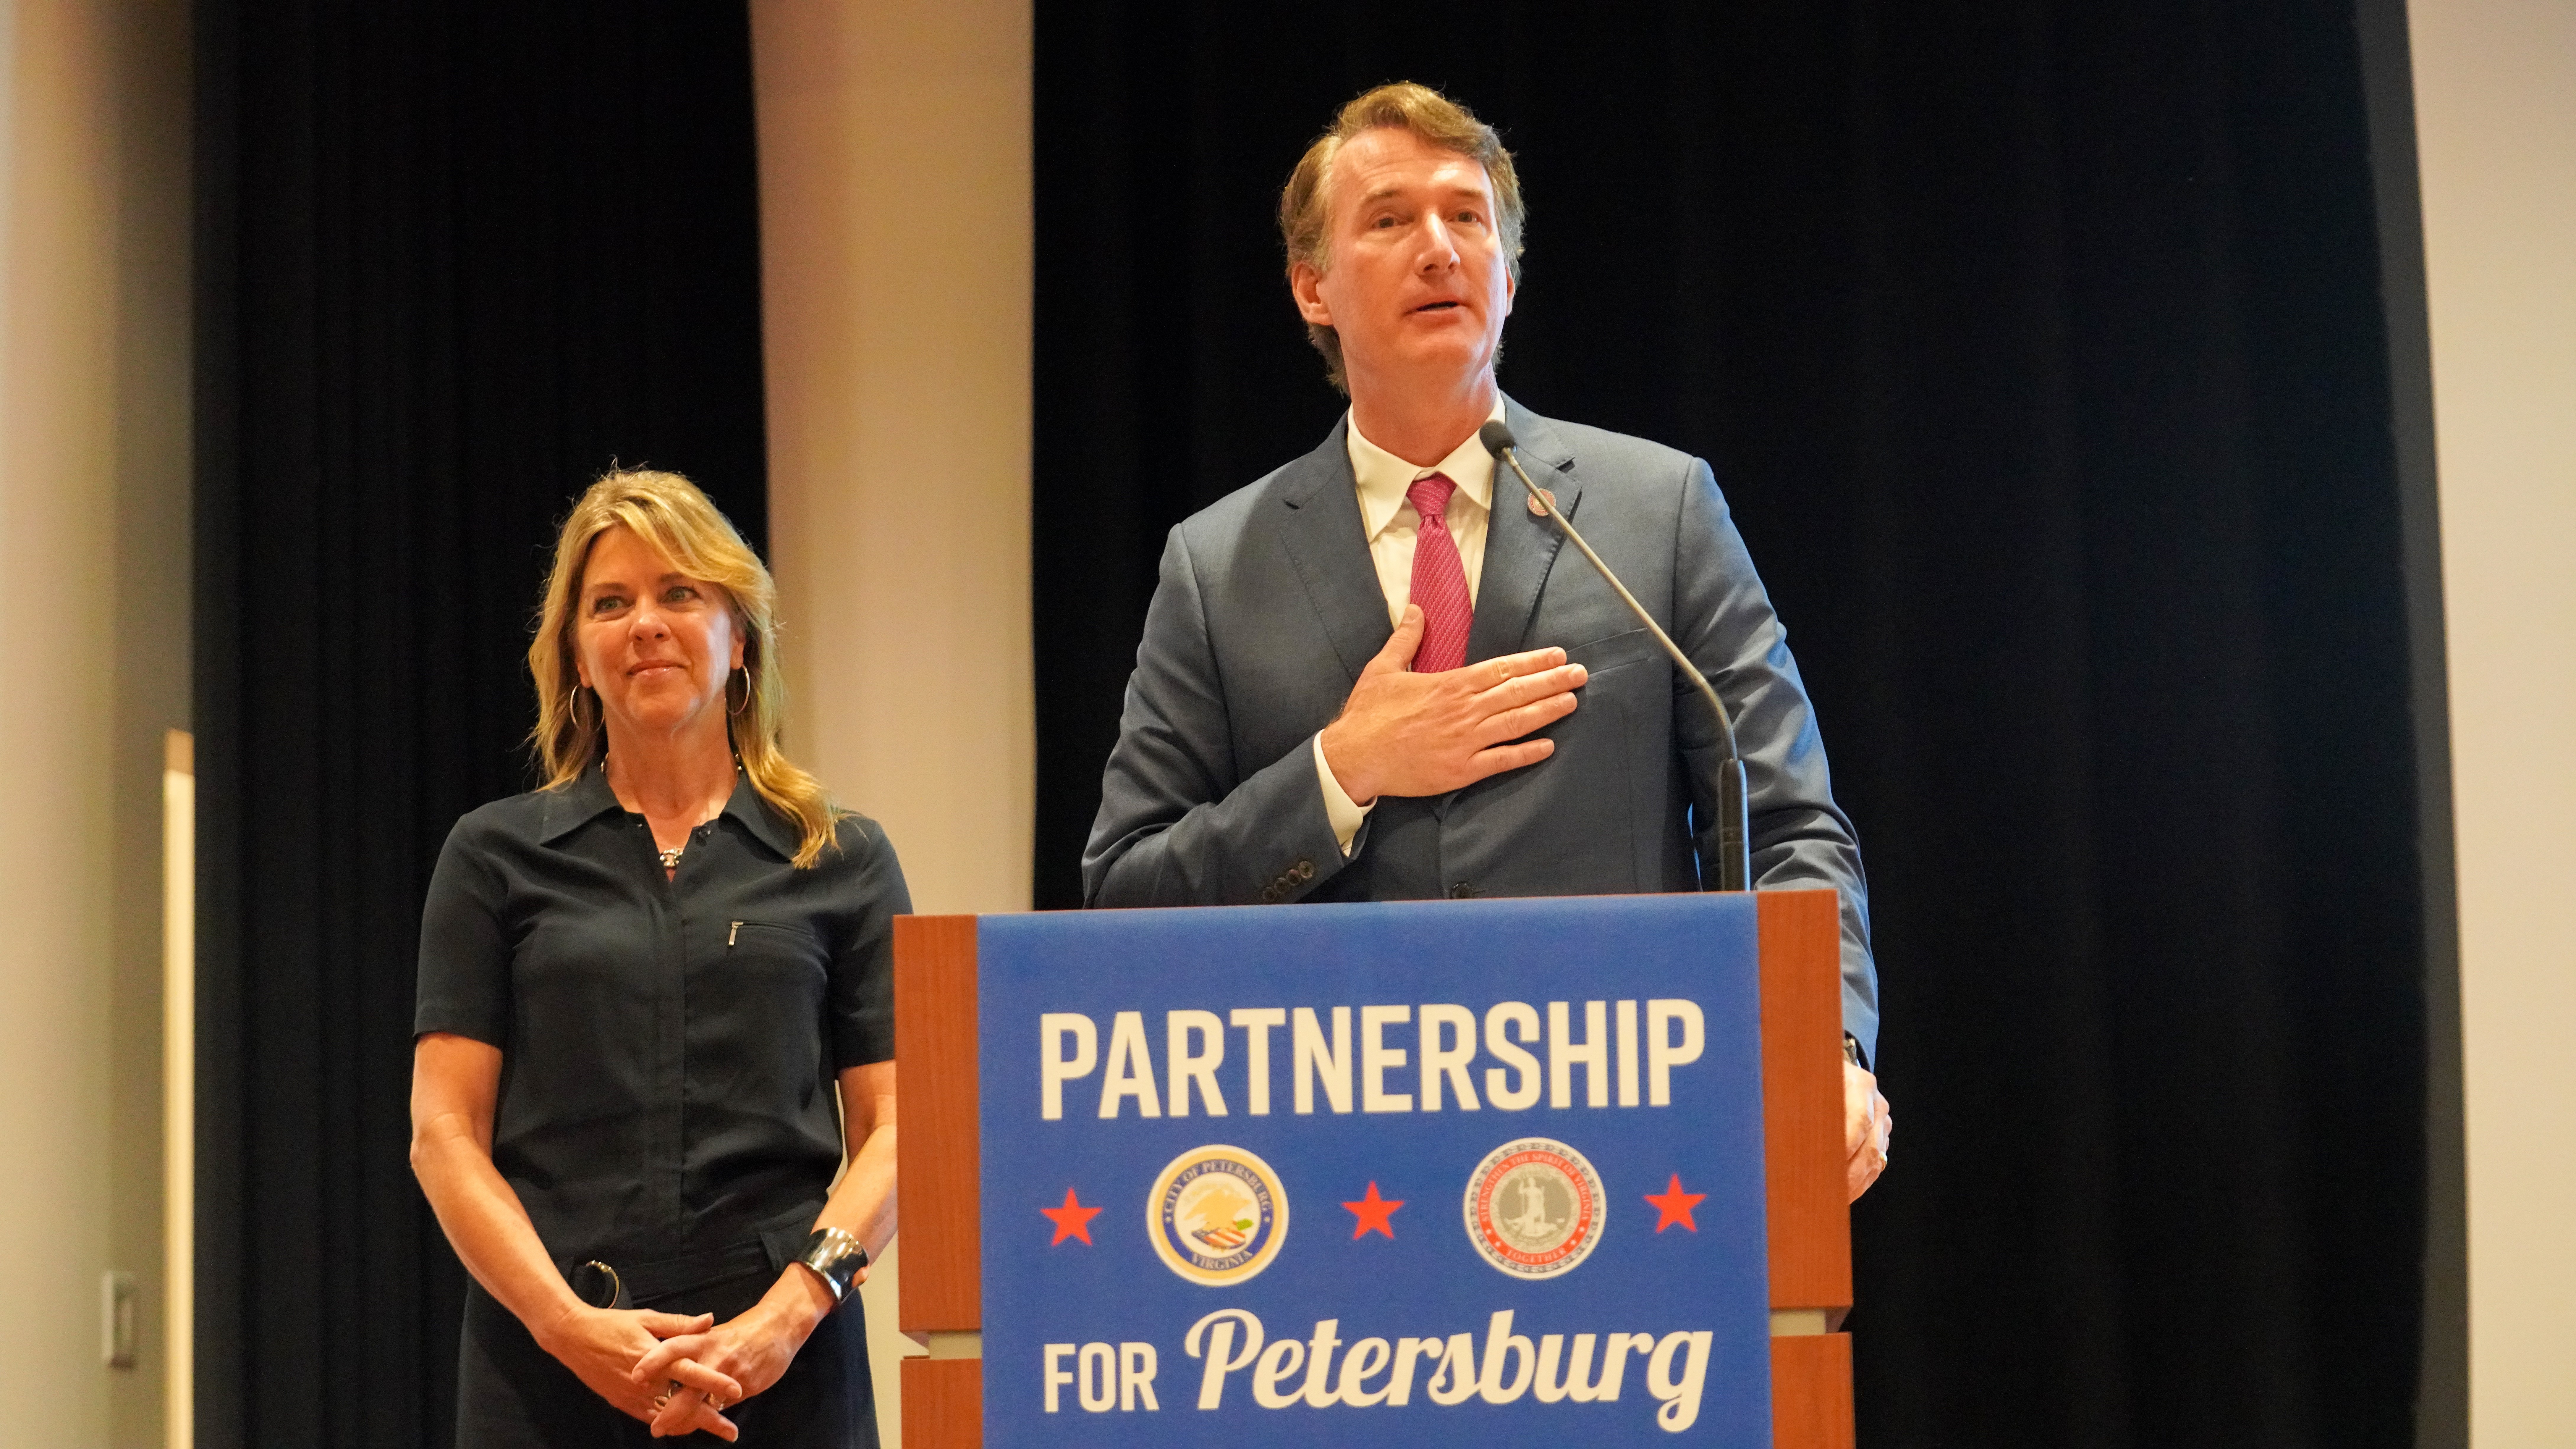  Partnership for Petersburg Slide 3